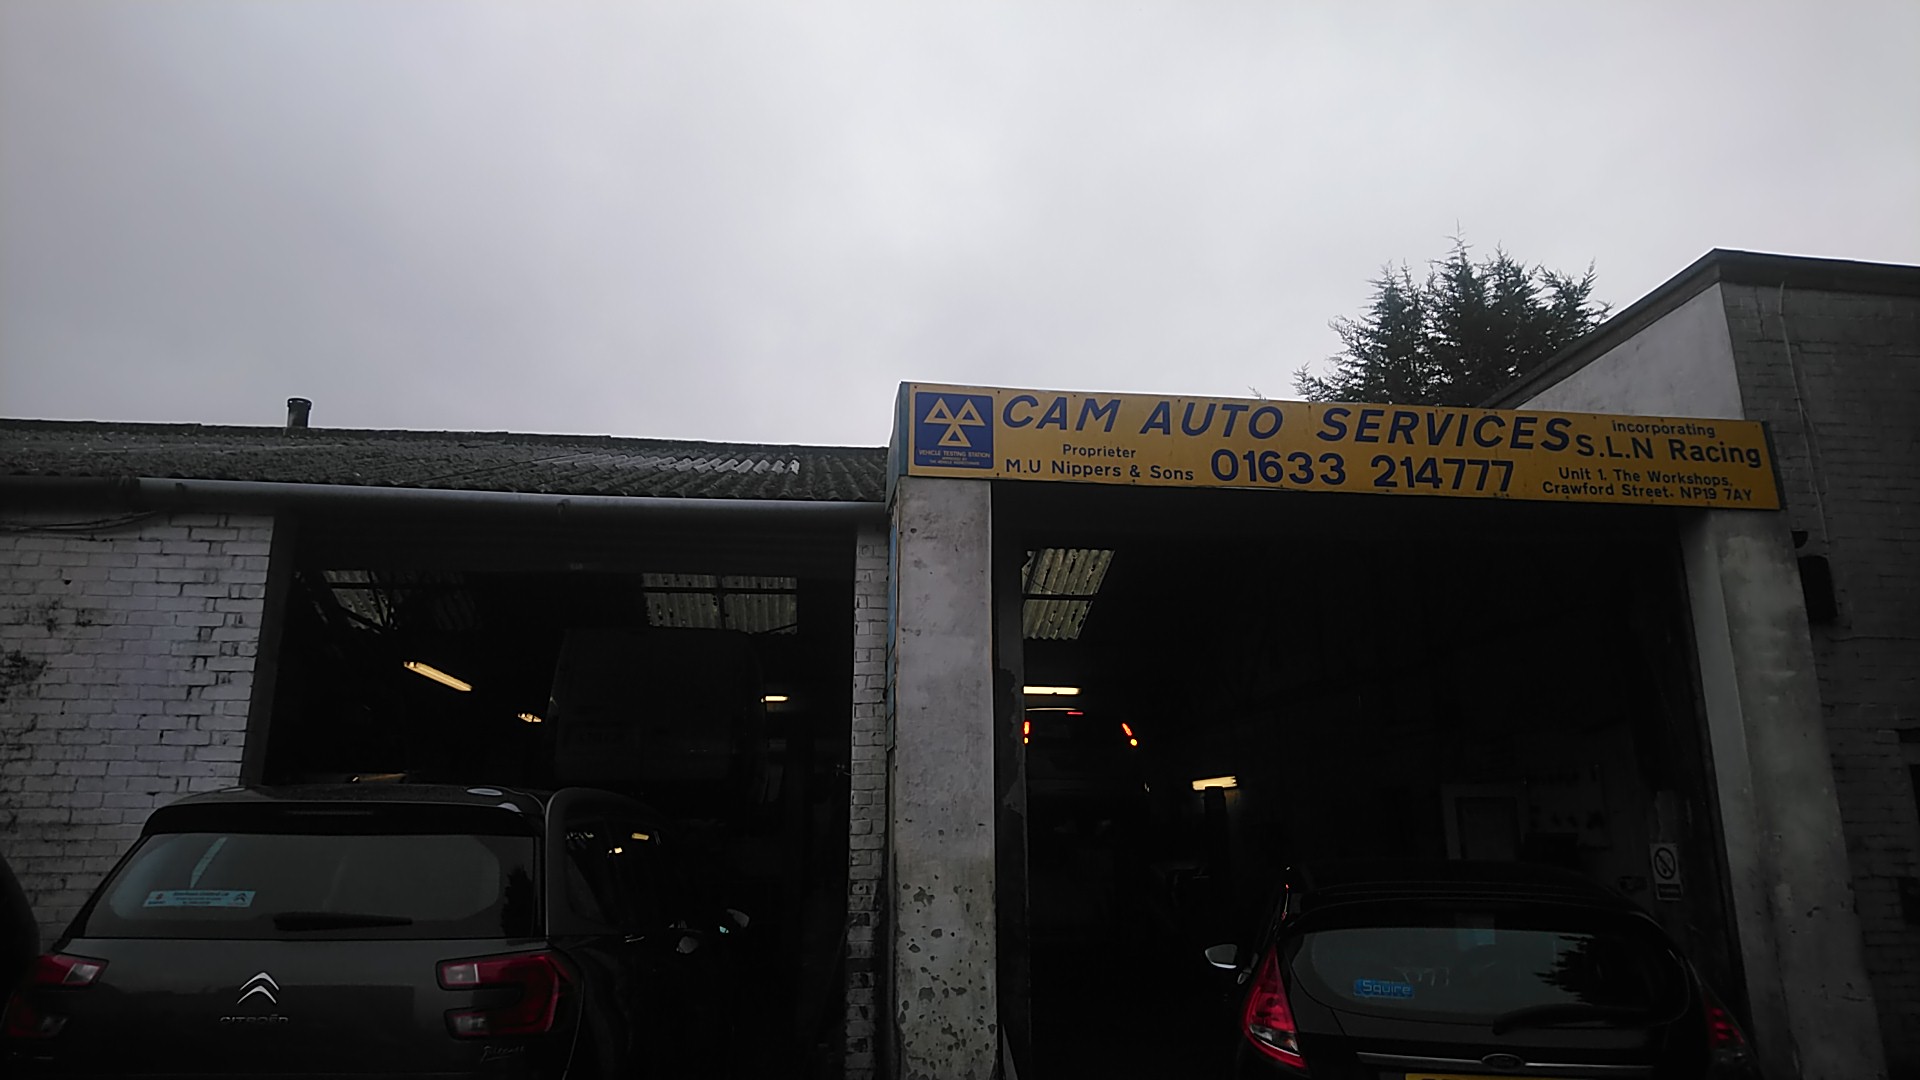 Cam Auto Services